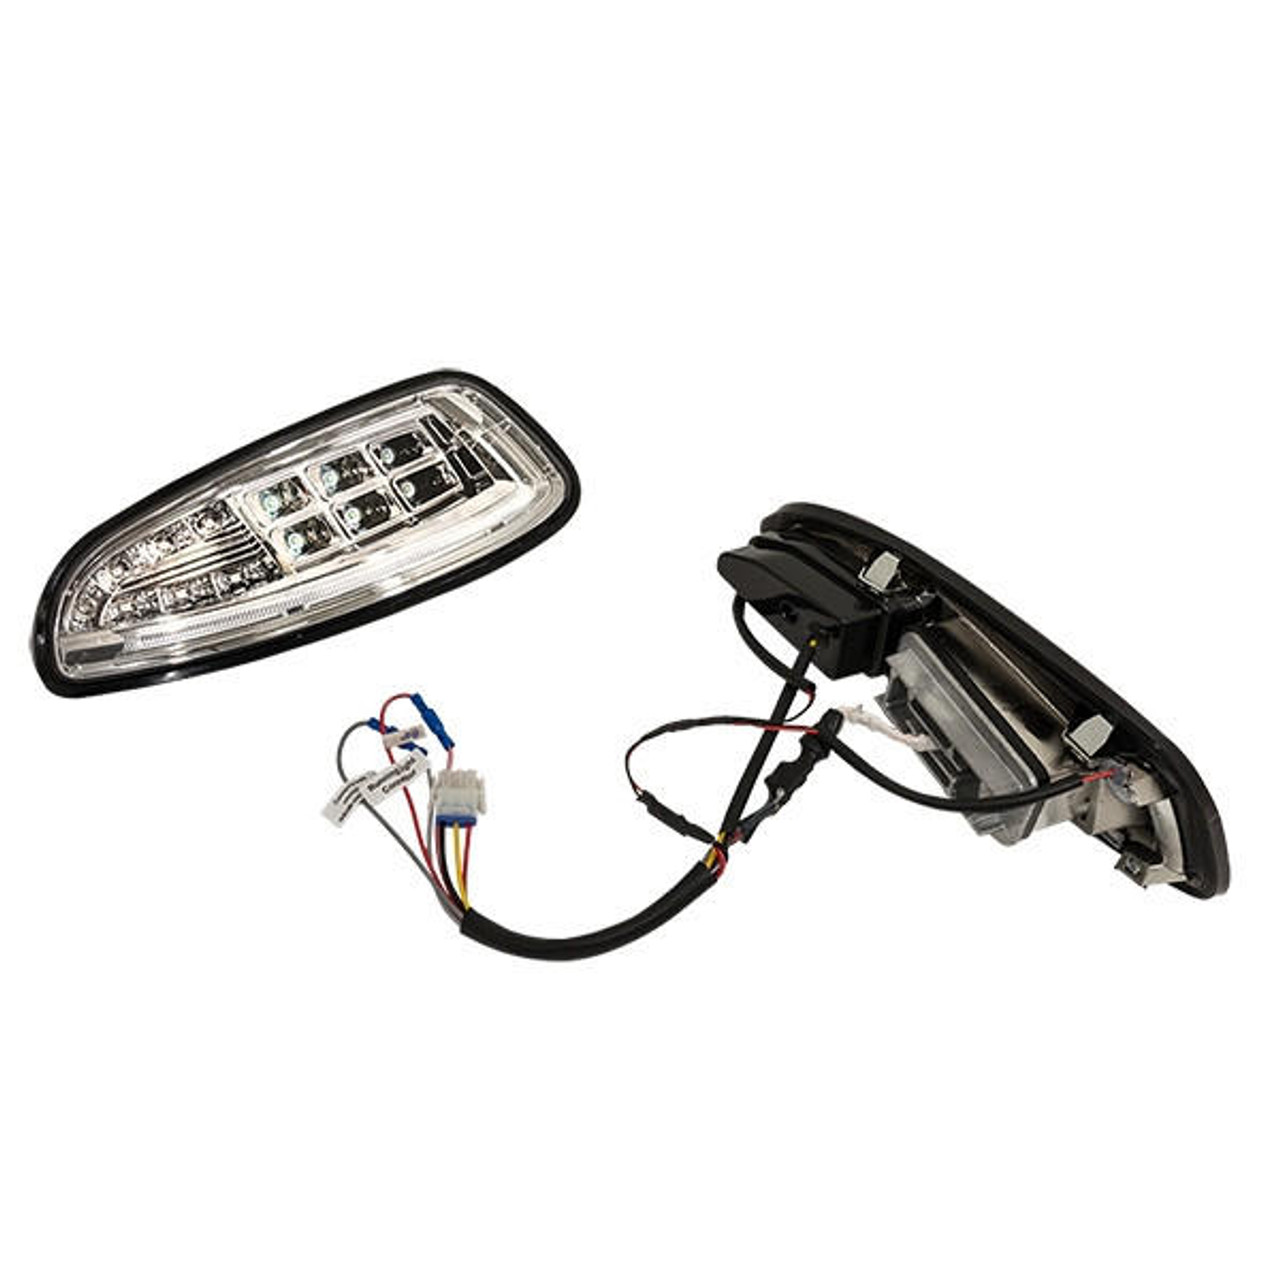  Madjax LED Ultimate Light Kit Plus - Fits EZGO RXV (2008-2015) 